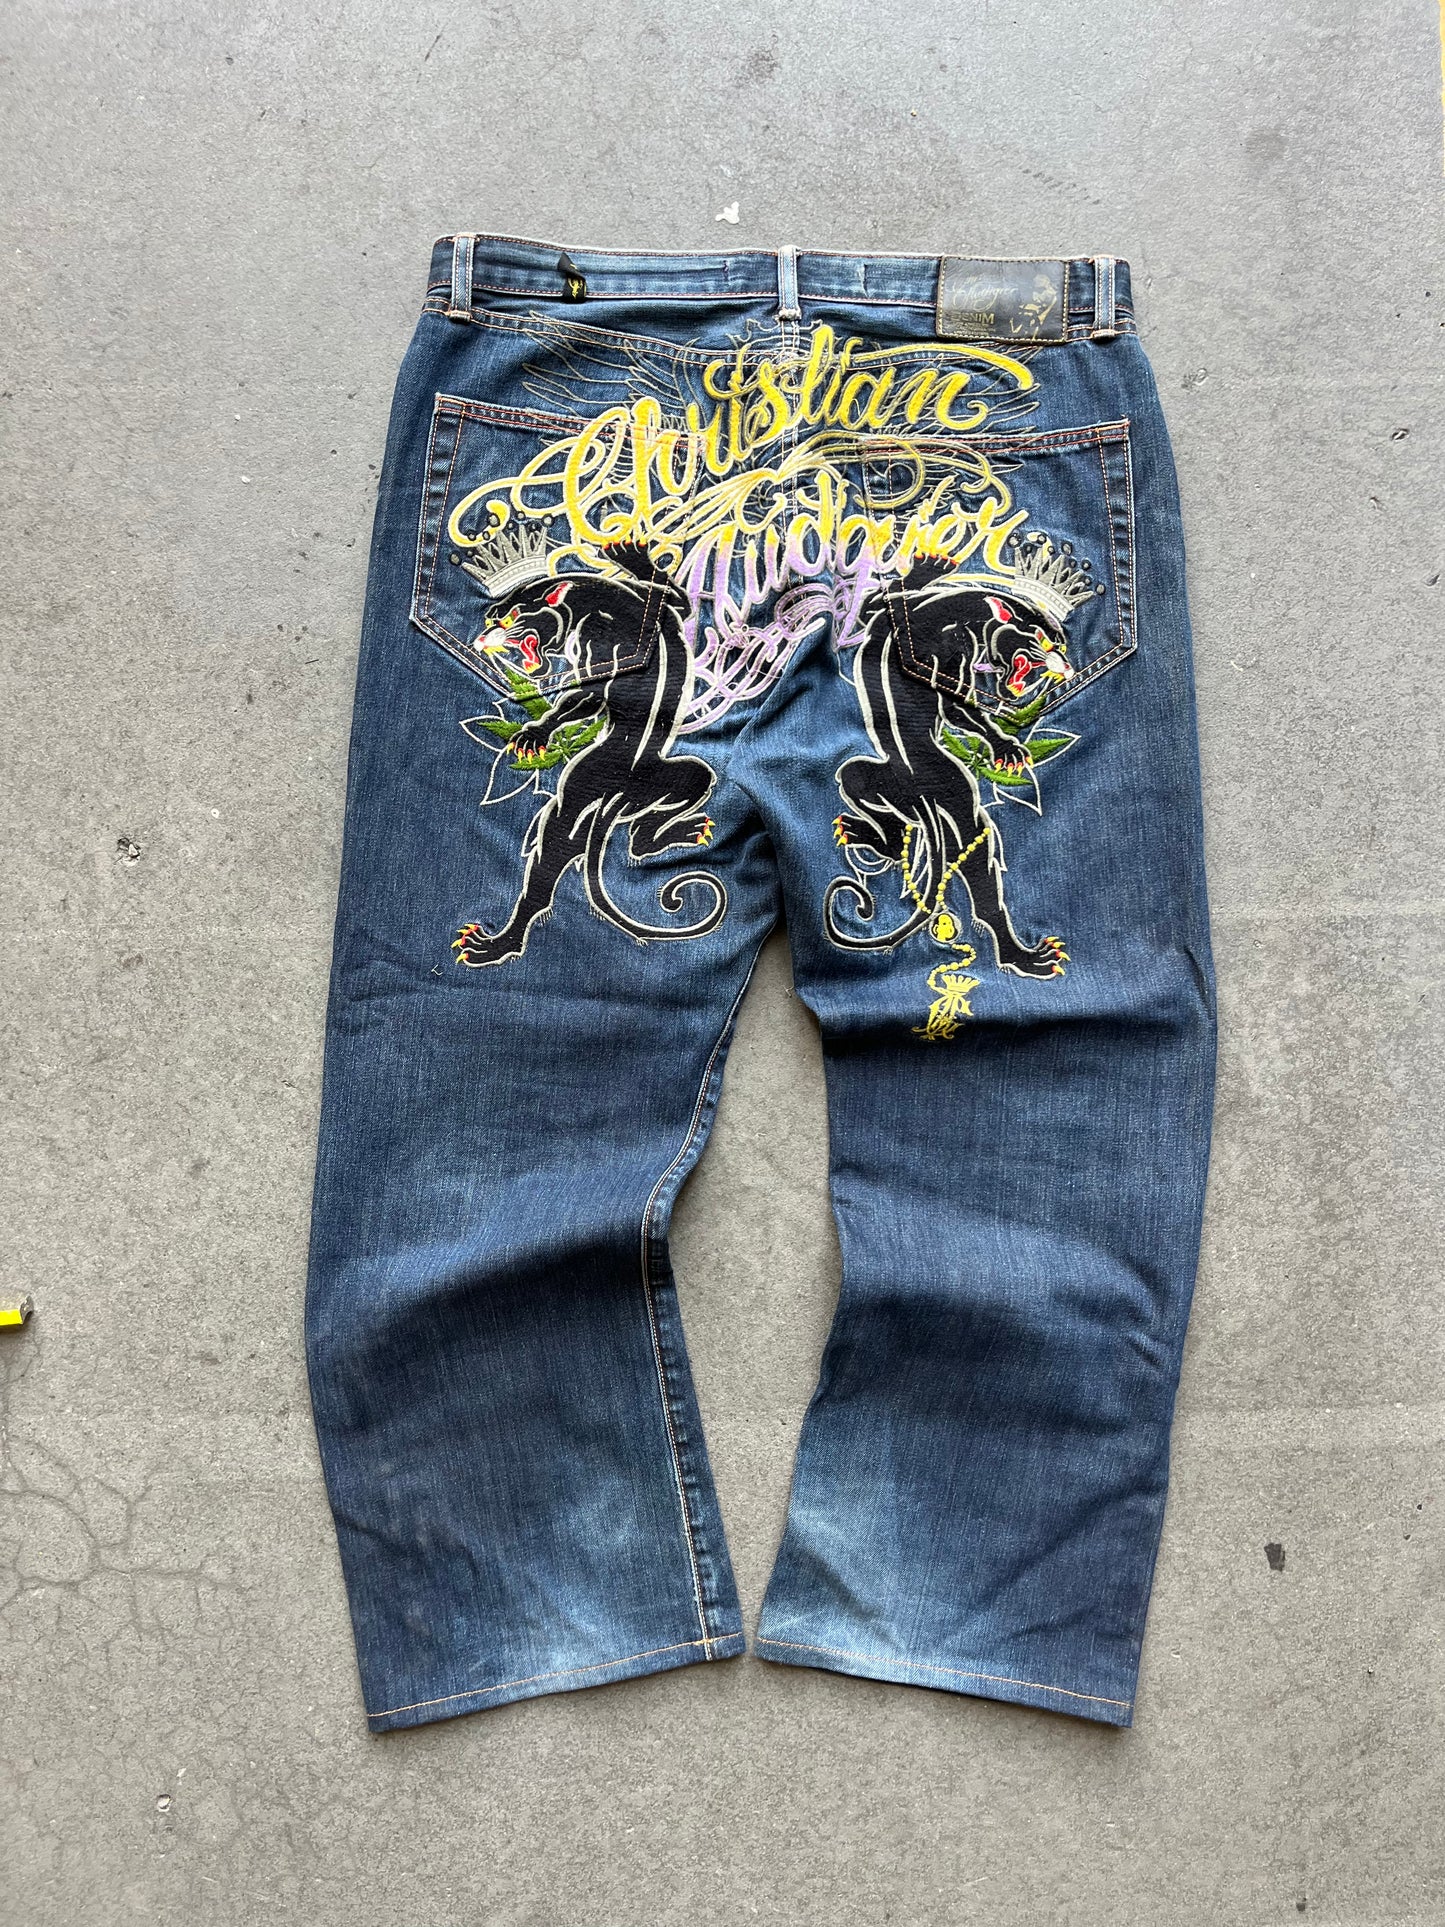 (38”) Christian Audigier Panther Print Jeans